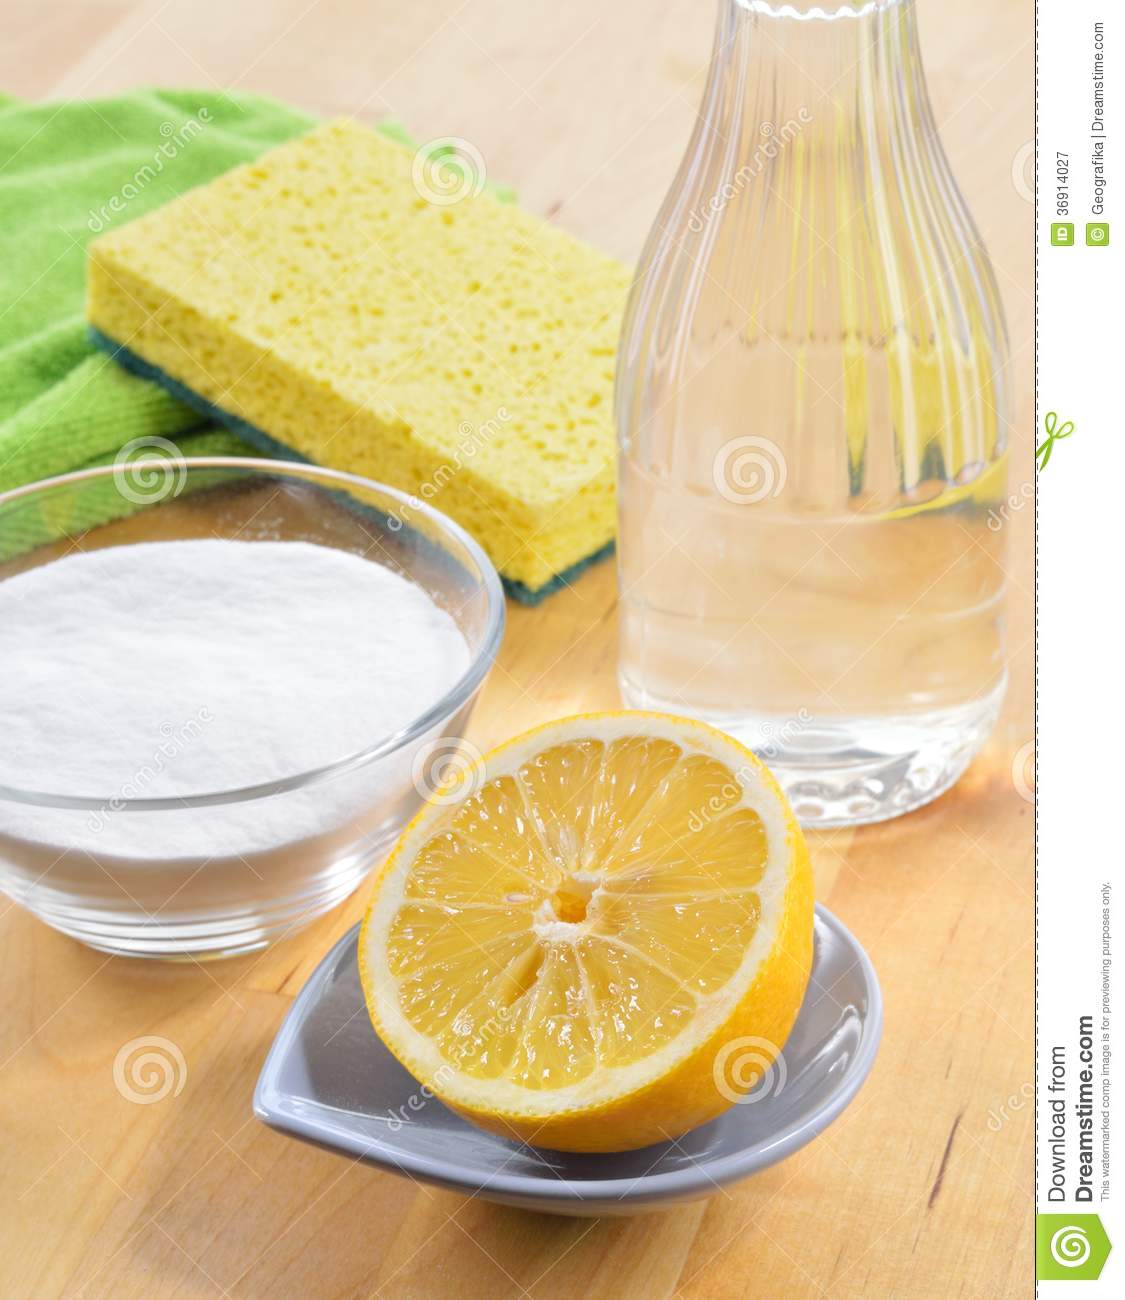 Natural Cleaners  Vinegar Baking Soda Salt And Lemon  Royalty Free